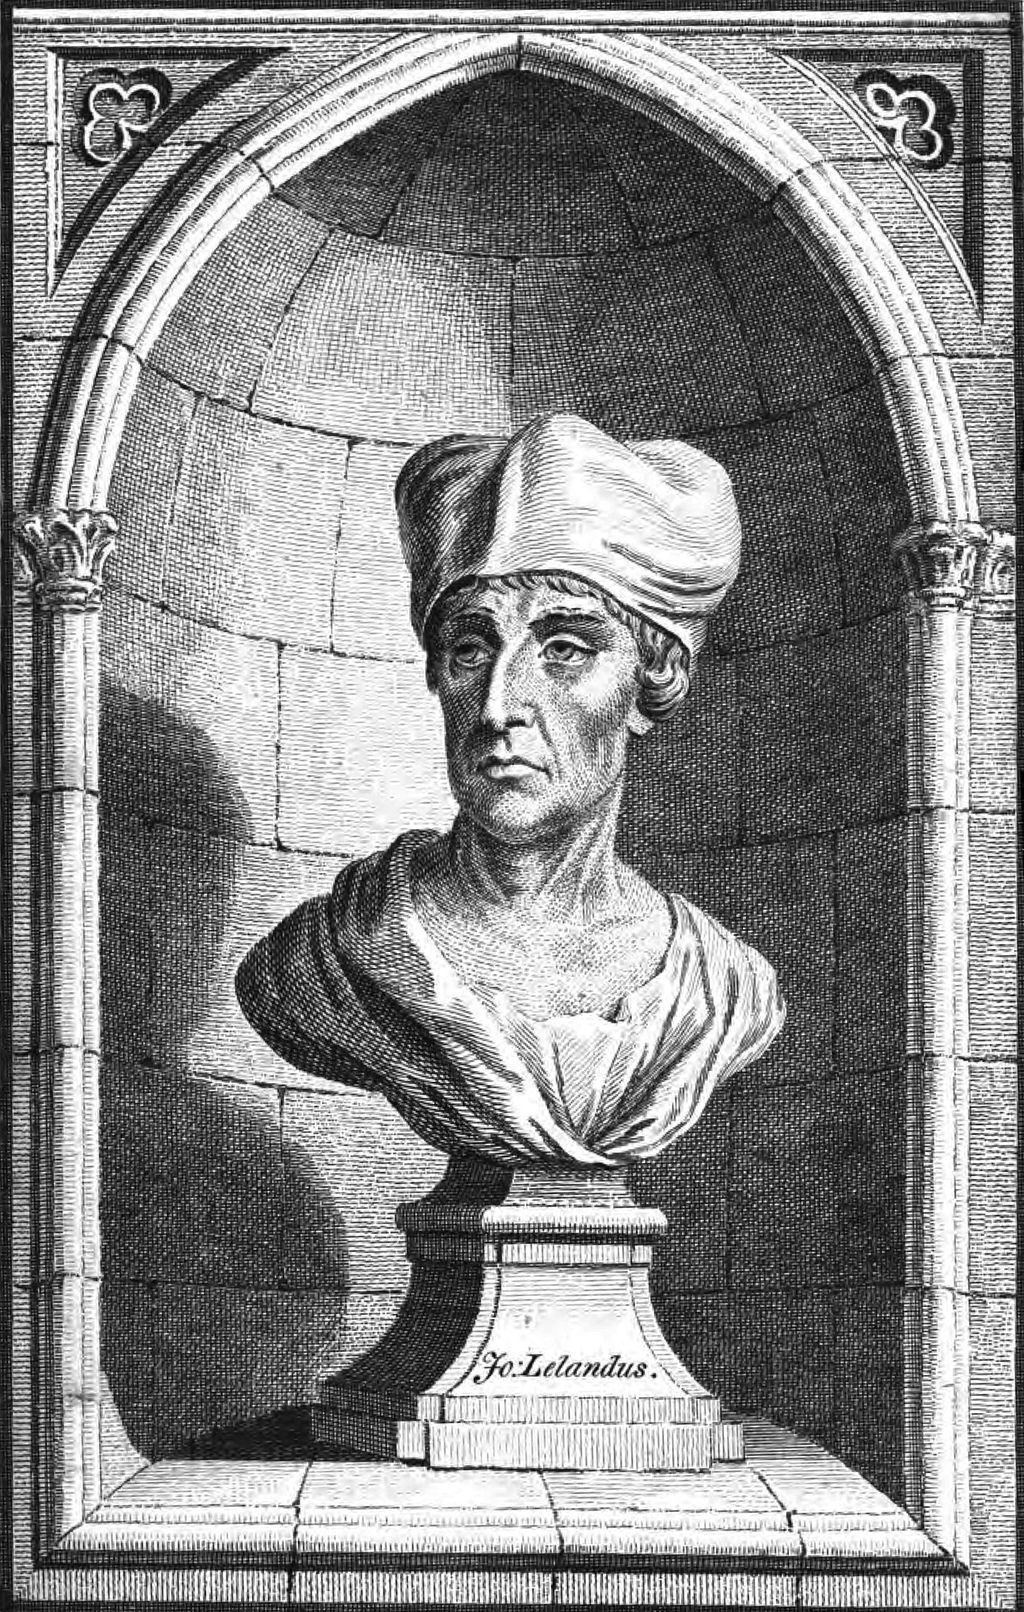 Tudor antiquarian and scholar John Leland